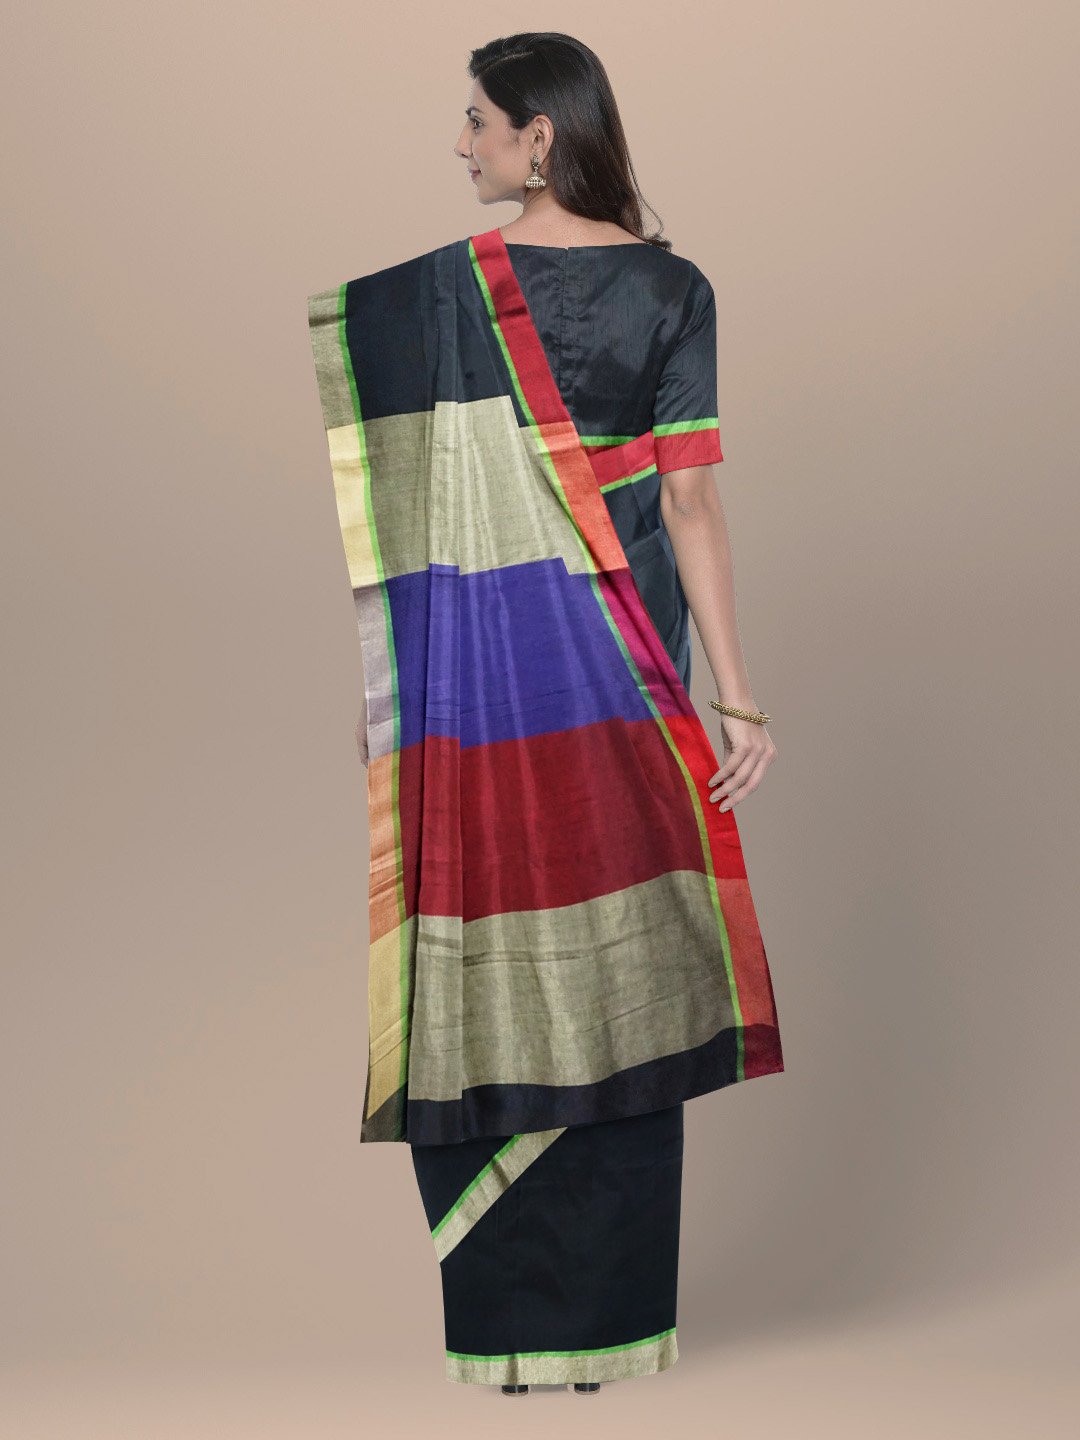 Nakshi Black With Multicolor Pallu Hand Woven Cotton Saree